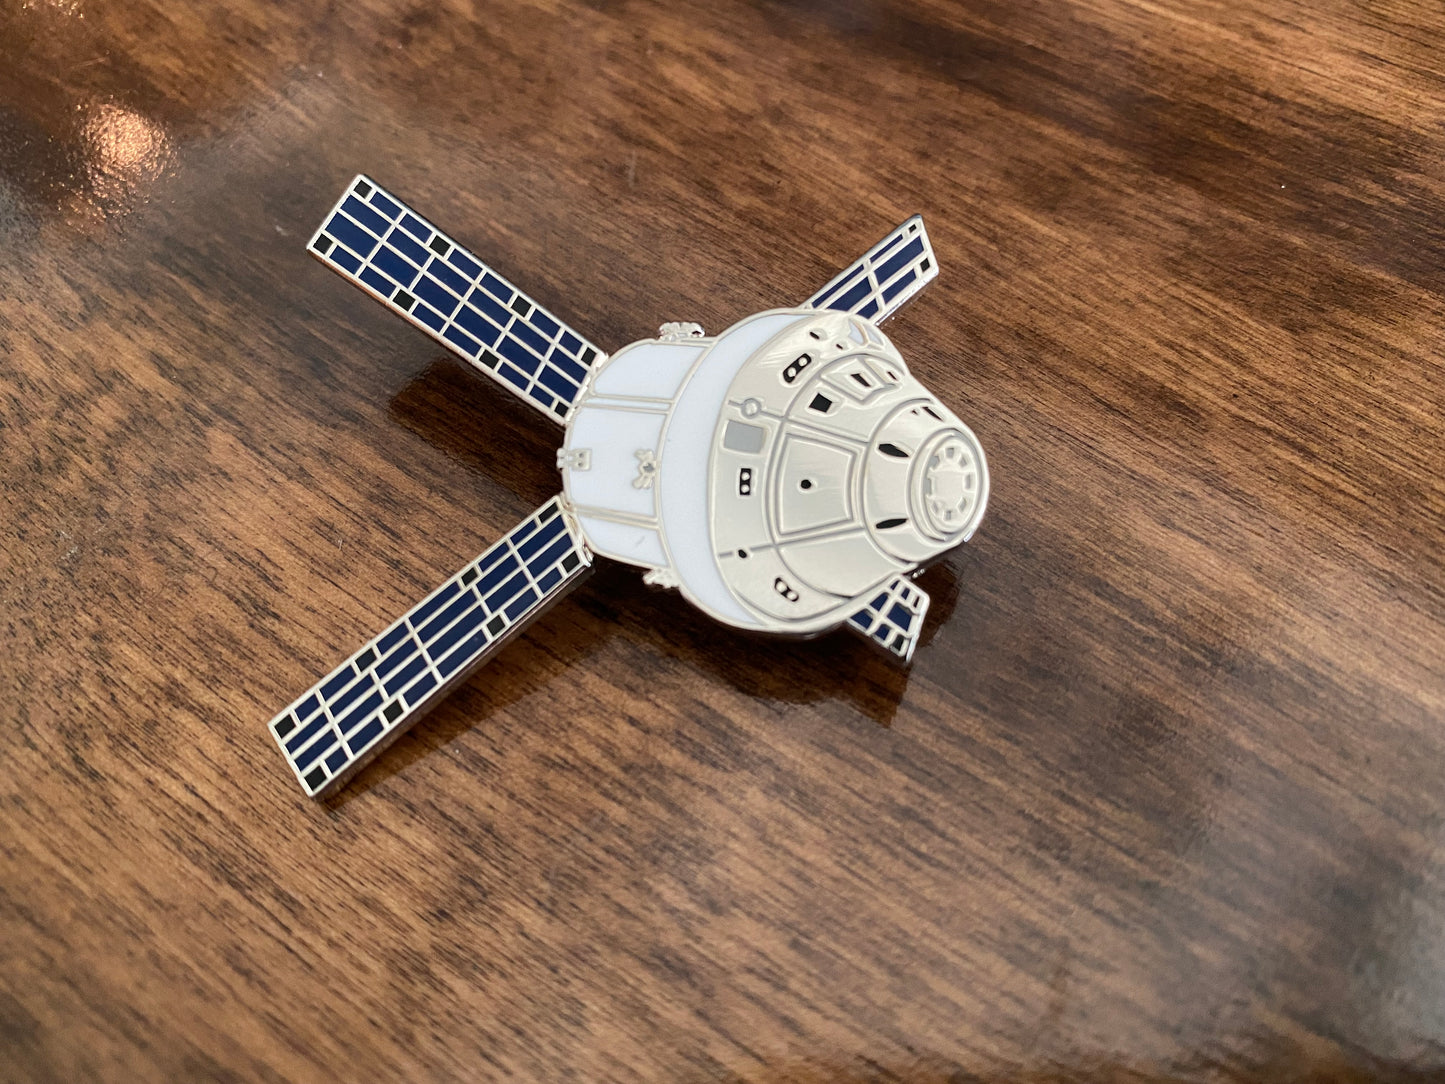 Orion capsule and service module